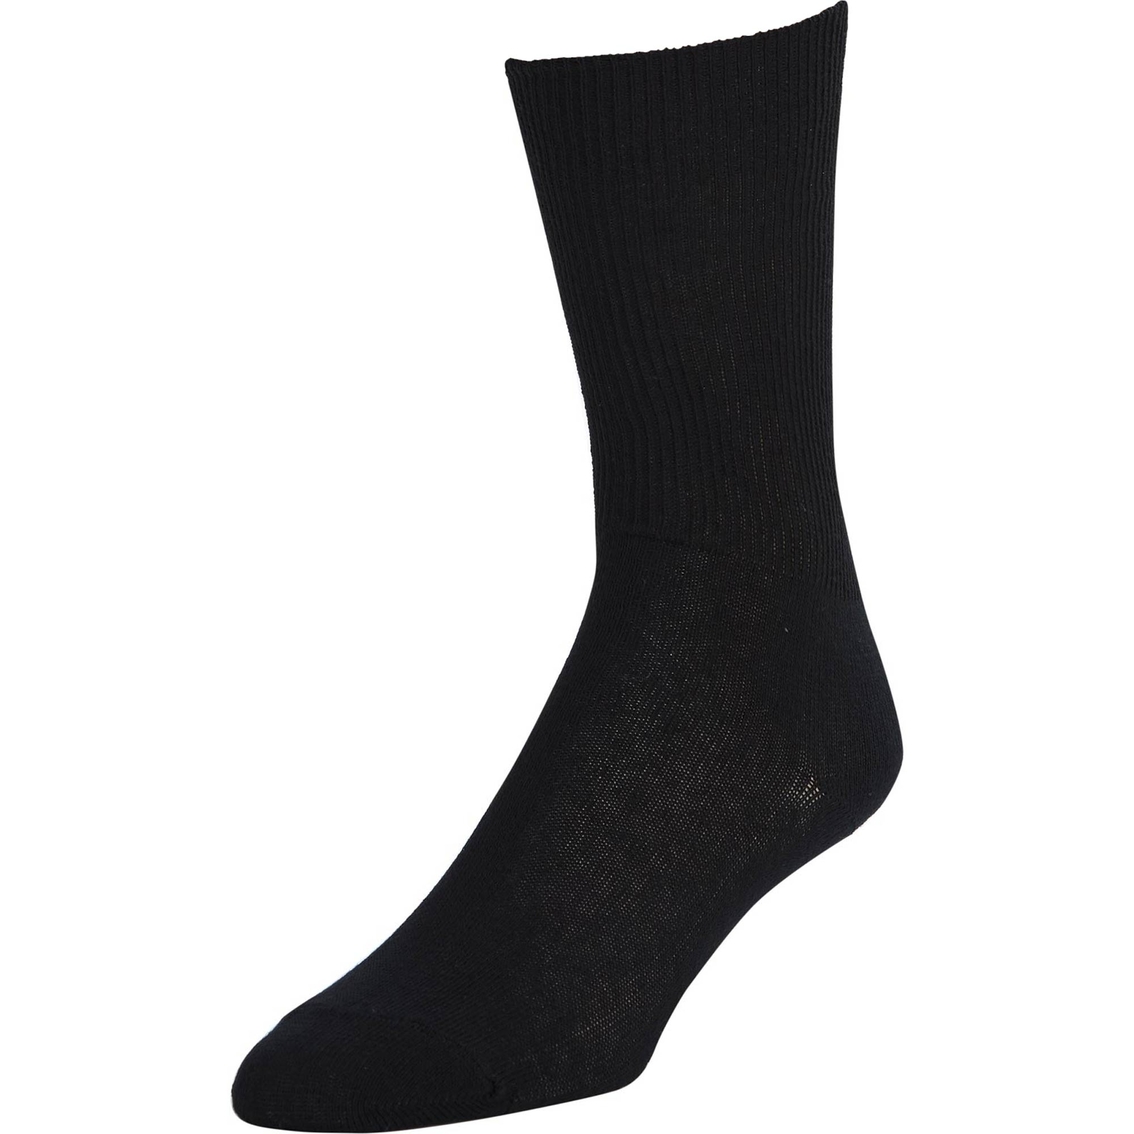 DLATS Black Cotton Nylon Socks